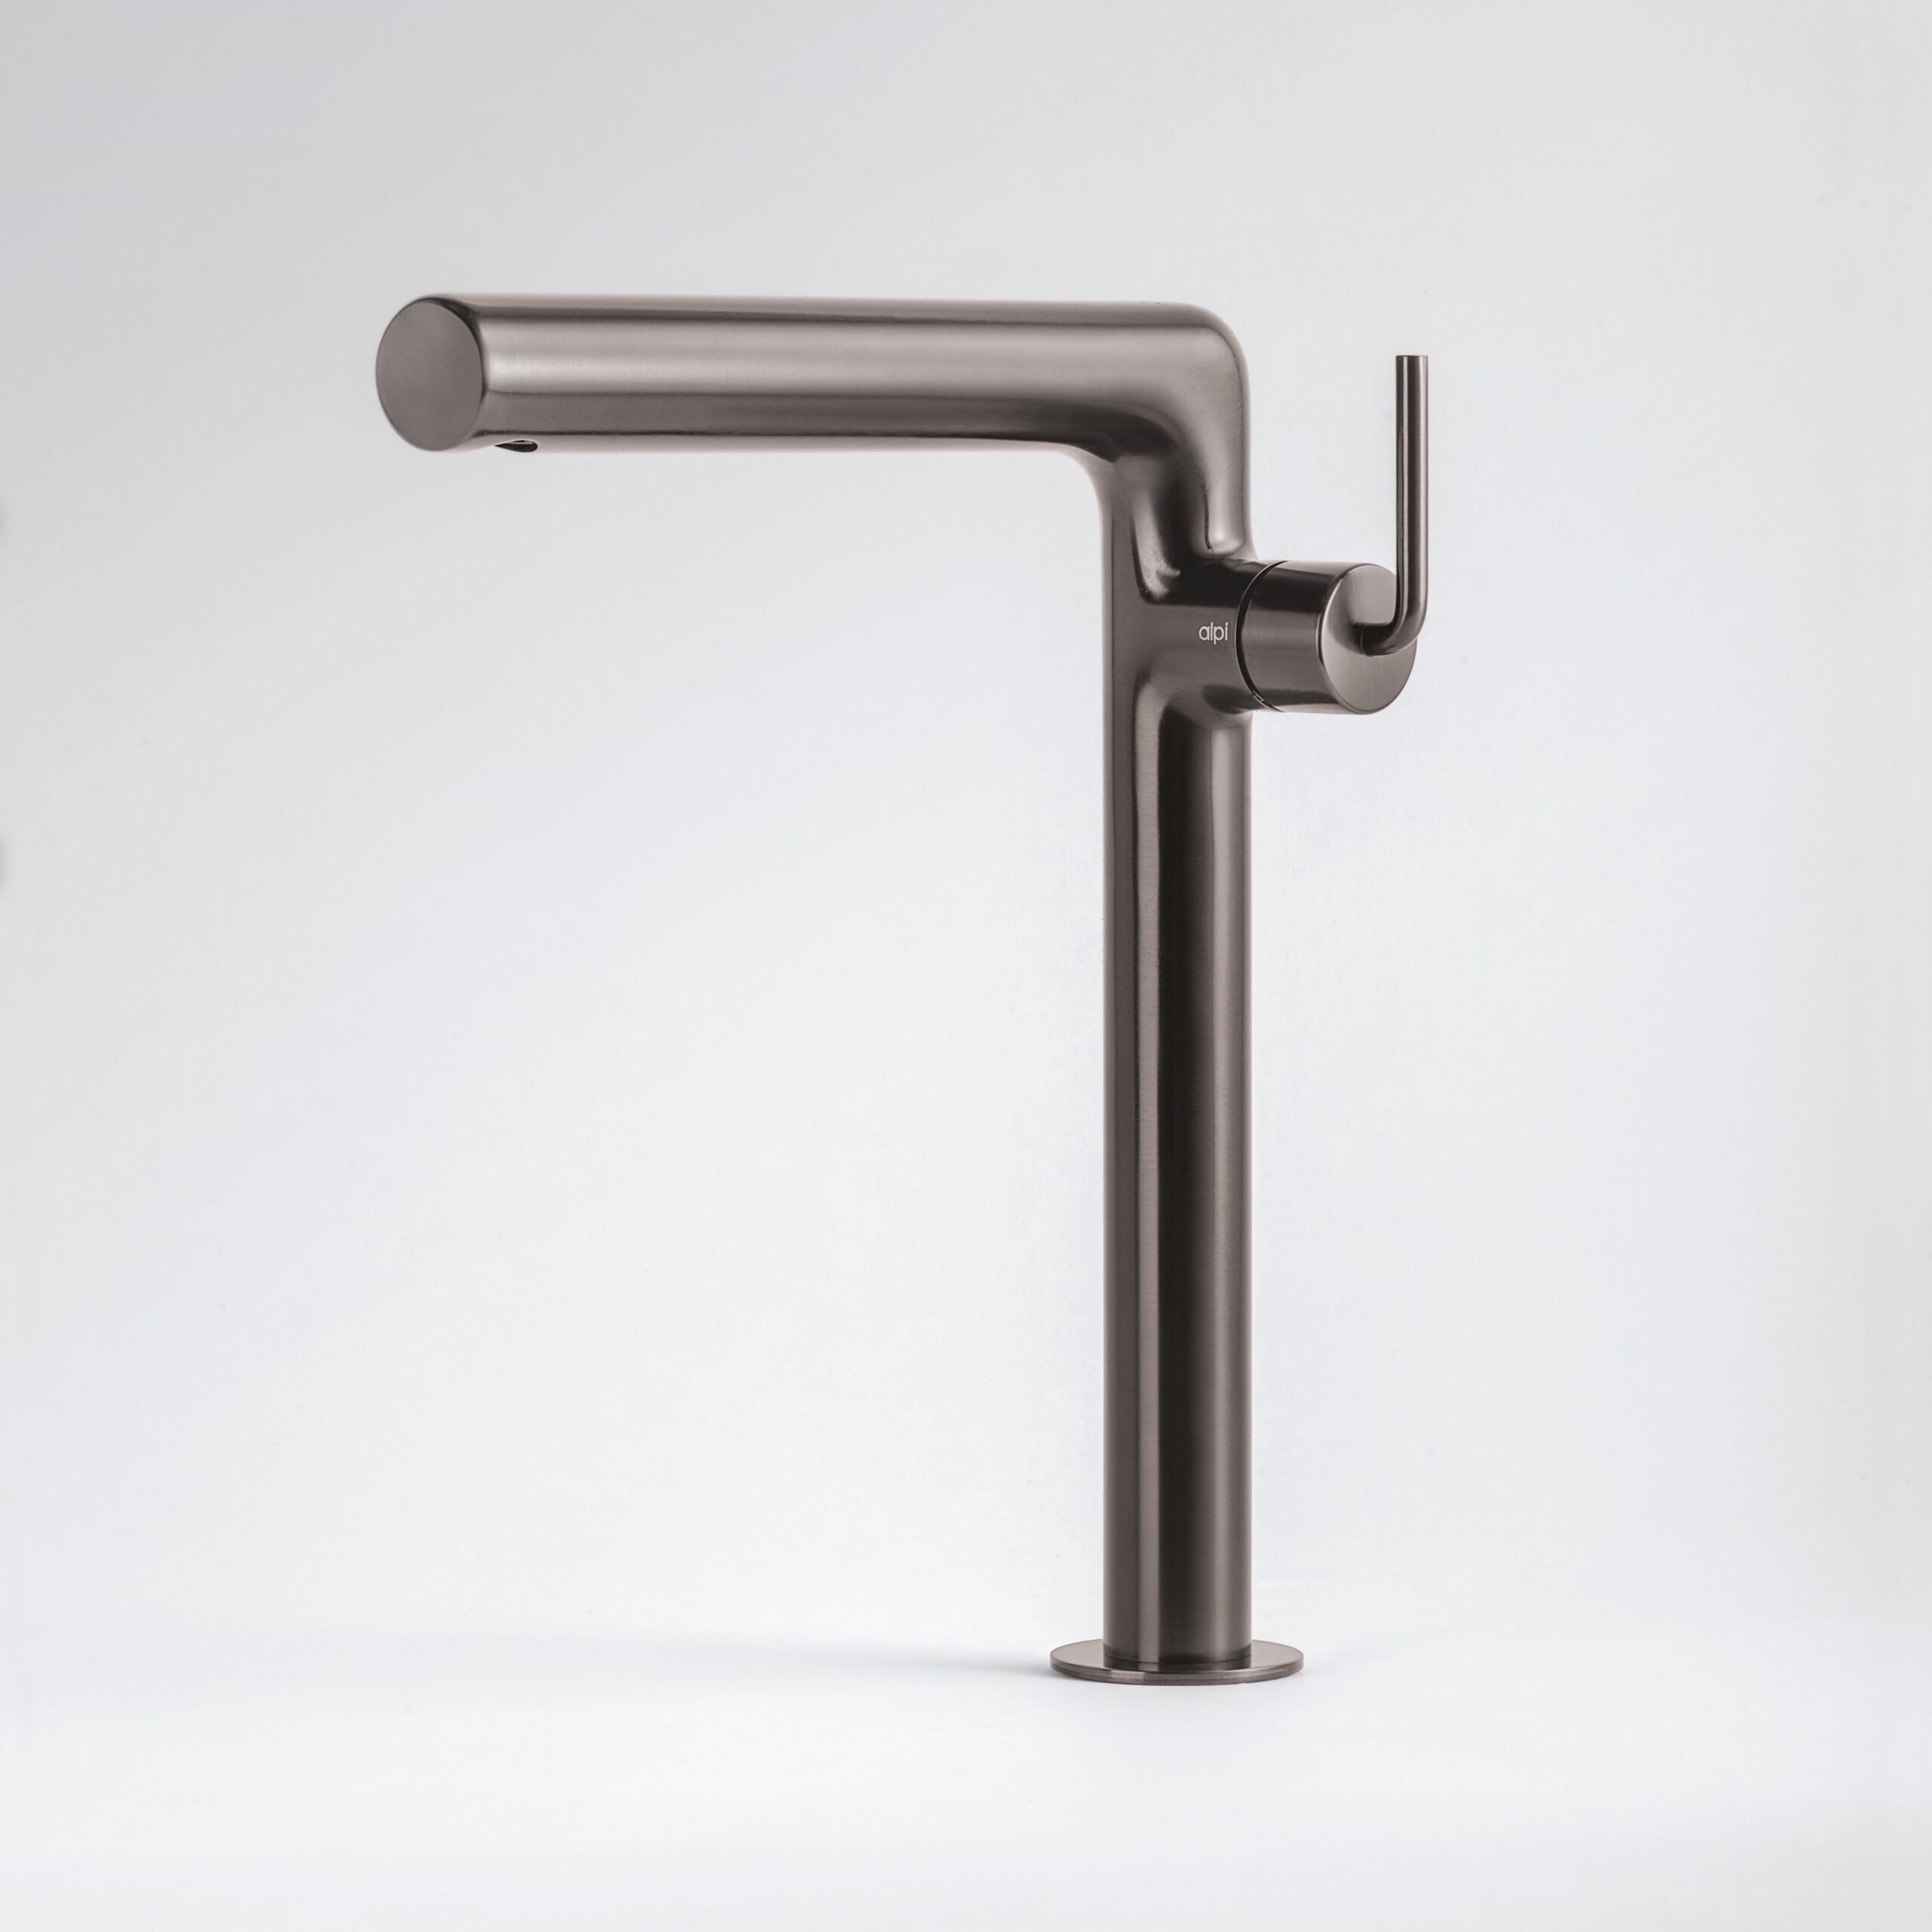 Watermixer For Bathroom Sink by ALPI